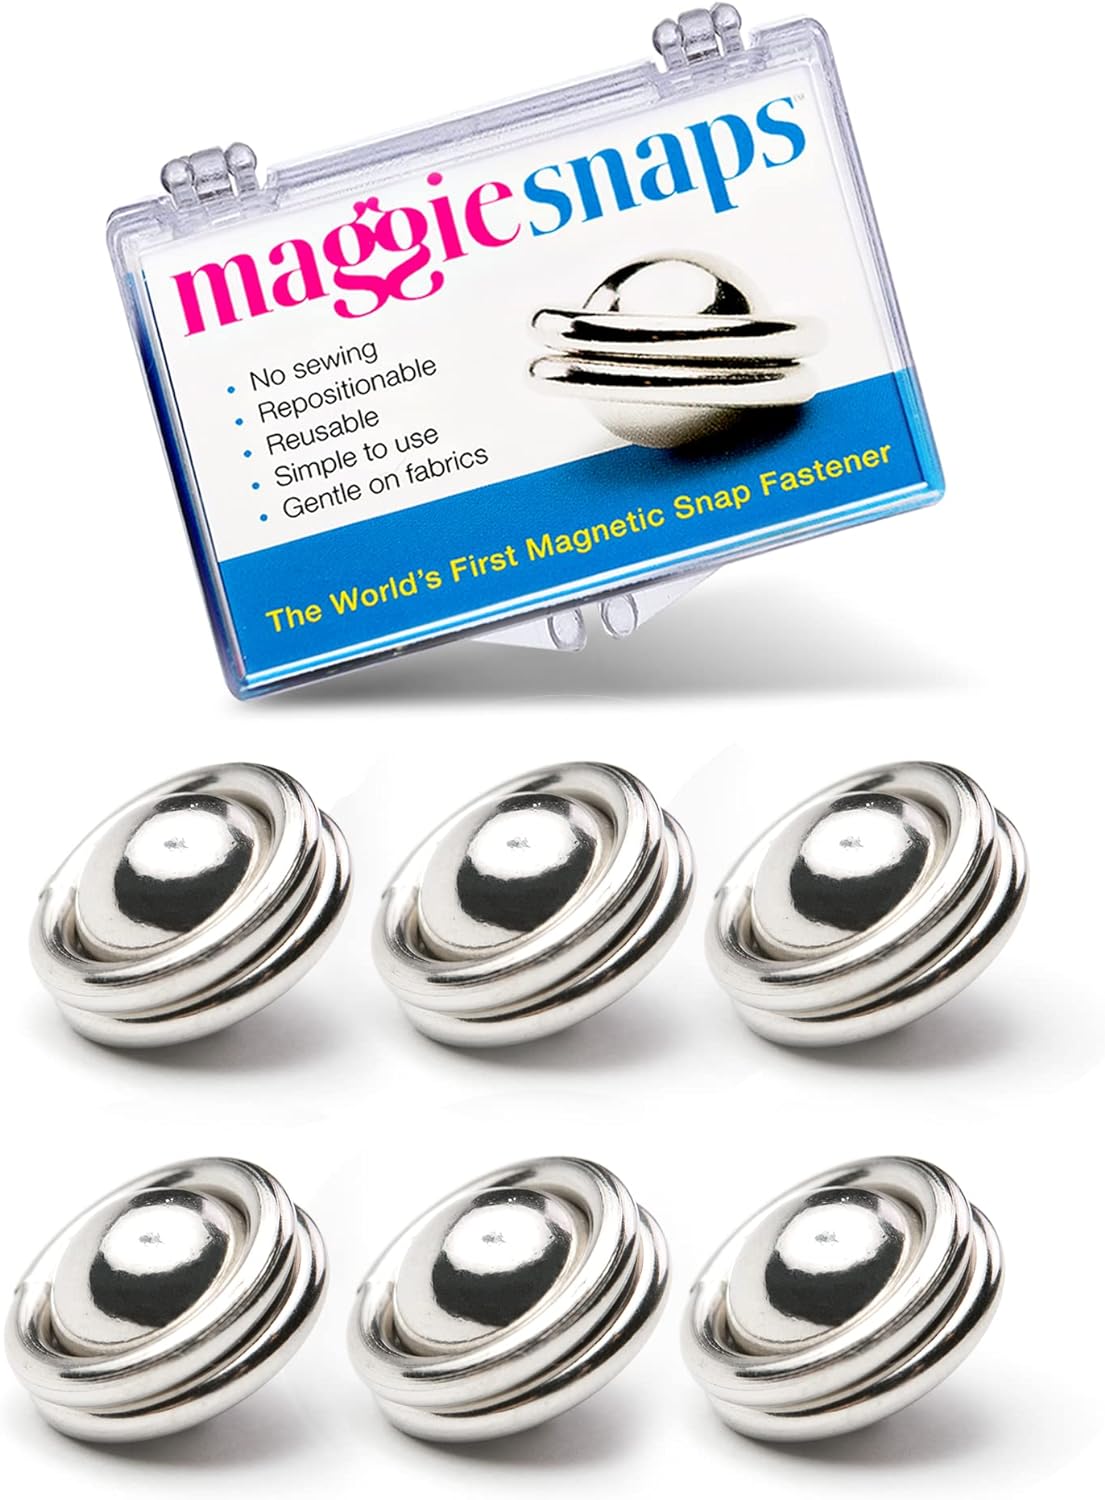 MAGNETIC BROOCH:Maggie 1-Snap Magnetic Brooch